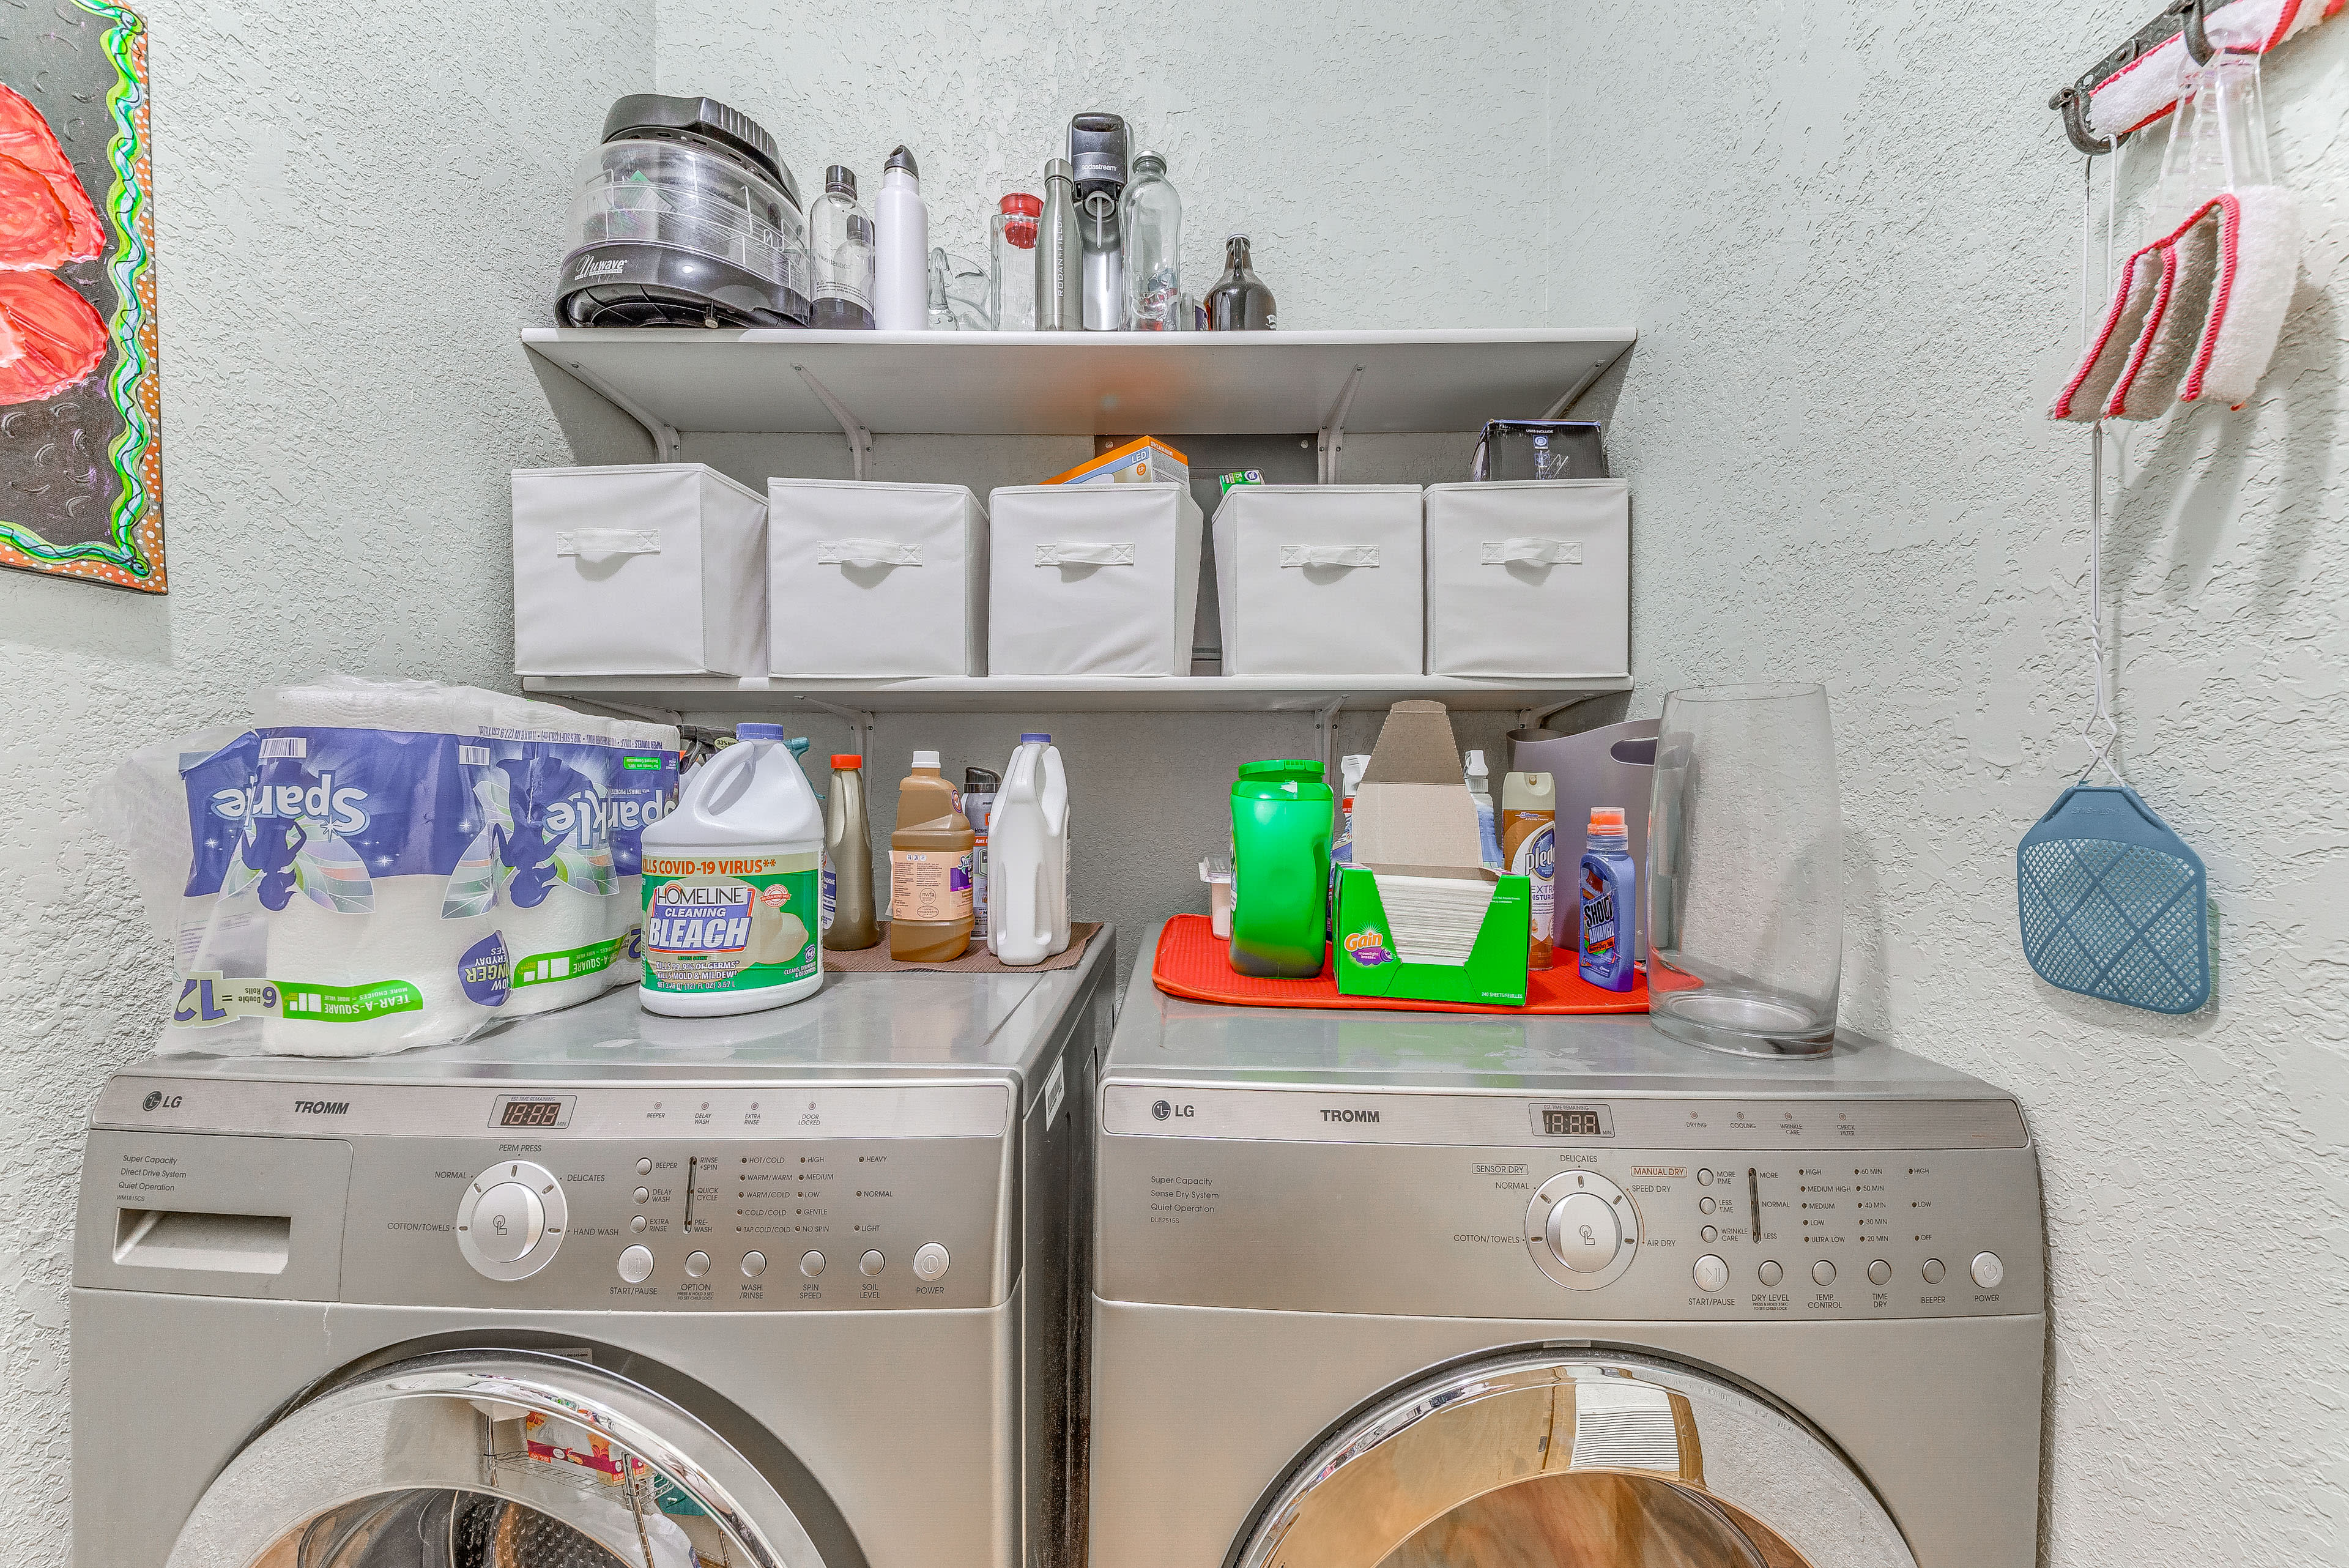 Laundry Room | 1st Floor | Detergent Provided